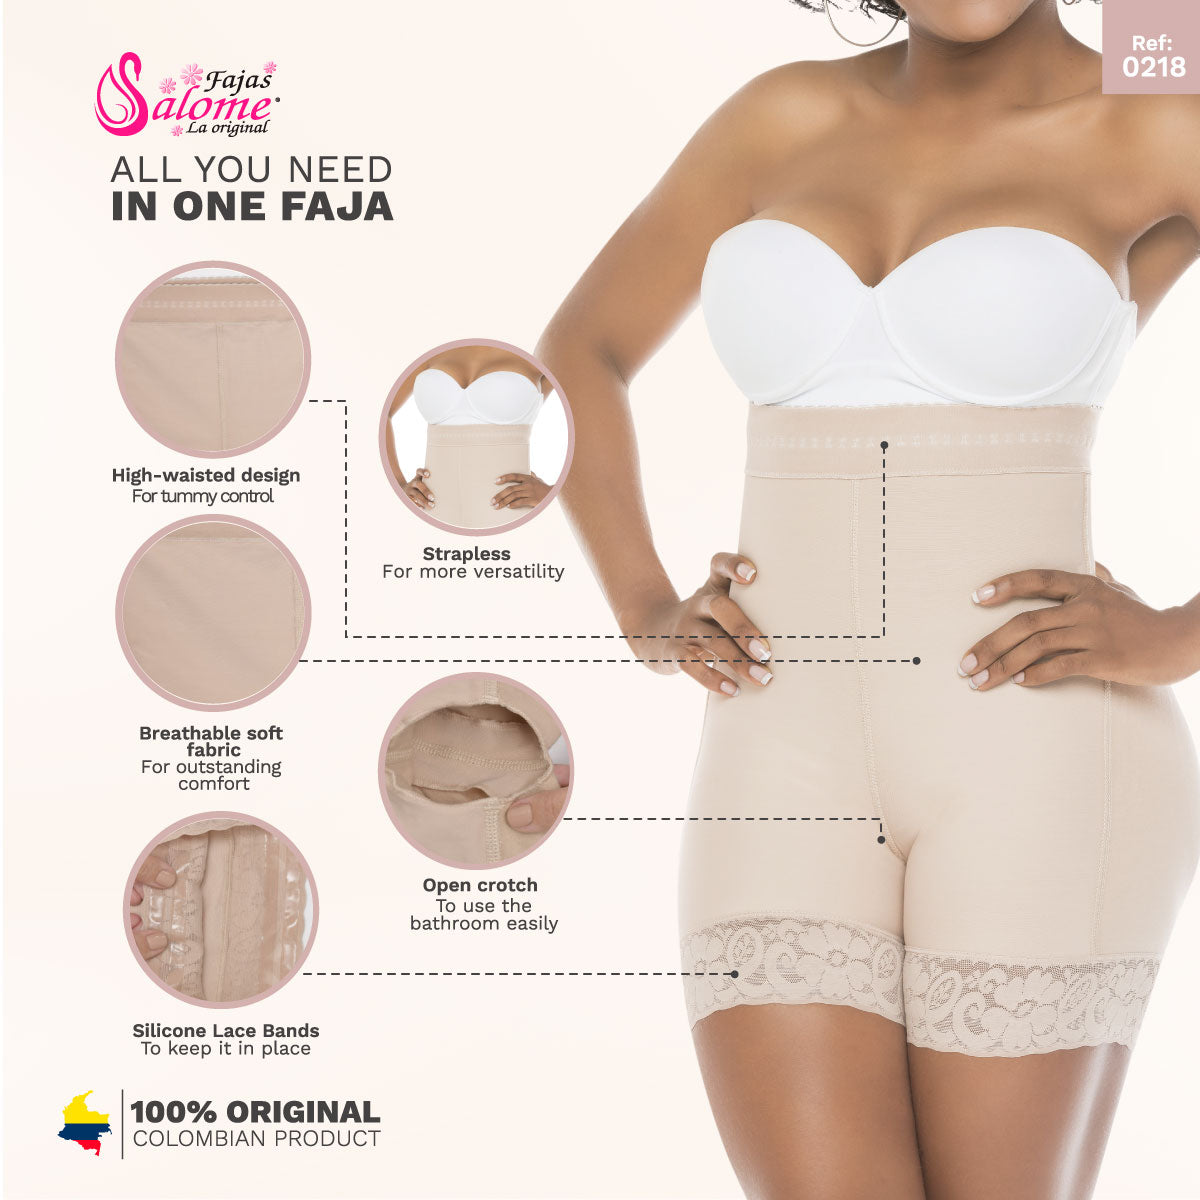 Auklamu Fajas Colombianas Shorts for Women Crotchless Underwear